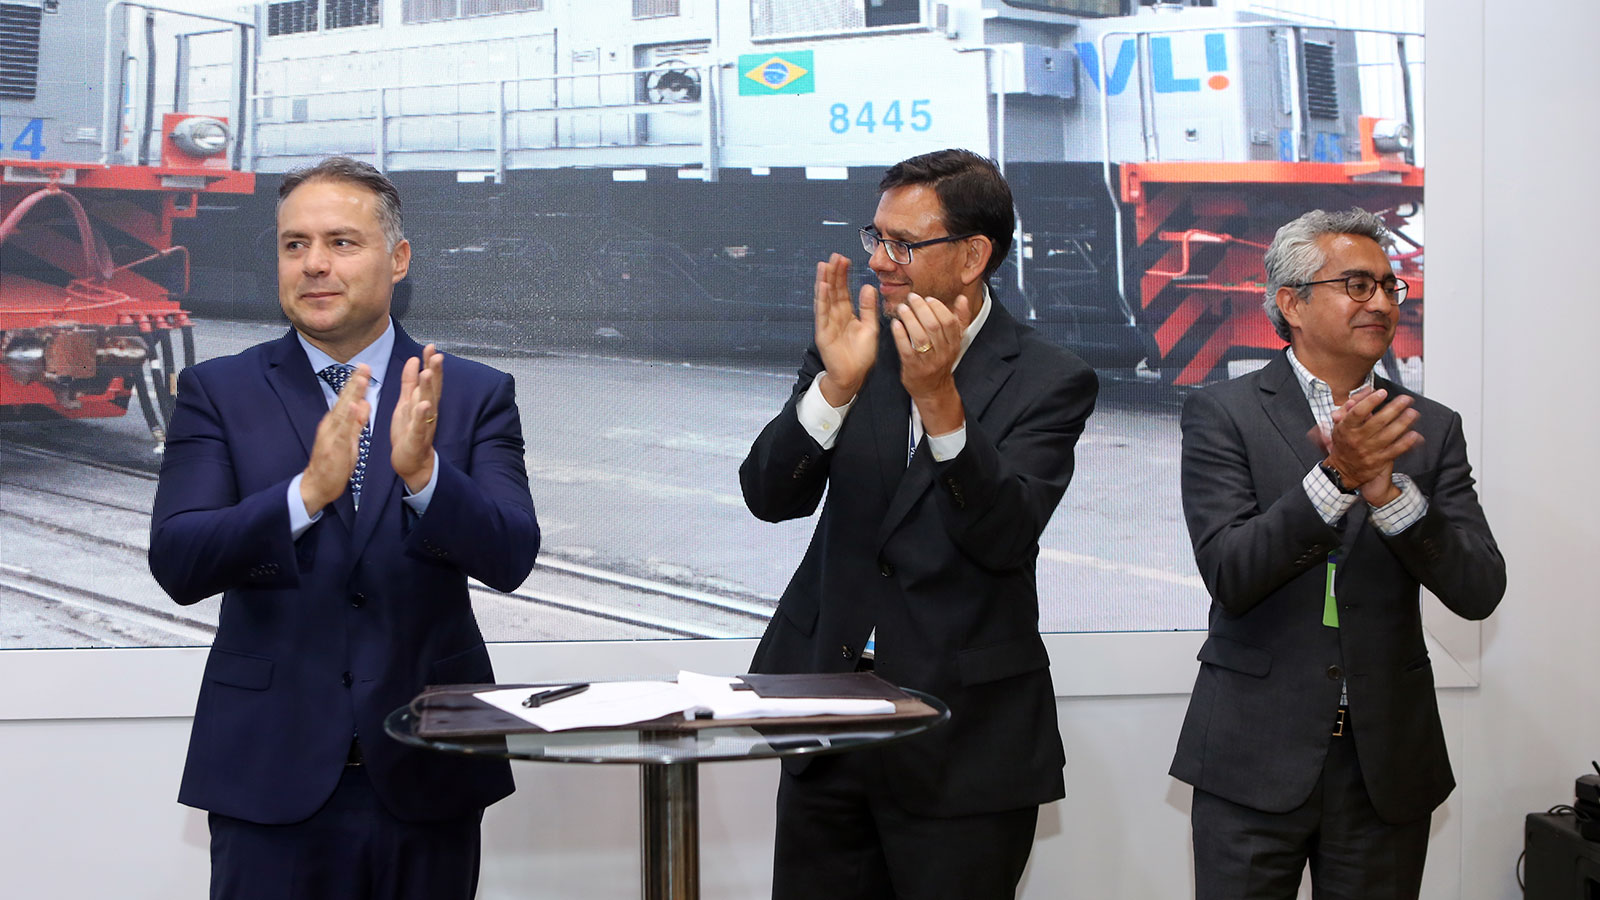 VLI Signs Contract for Nine Wabtec Locomotives